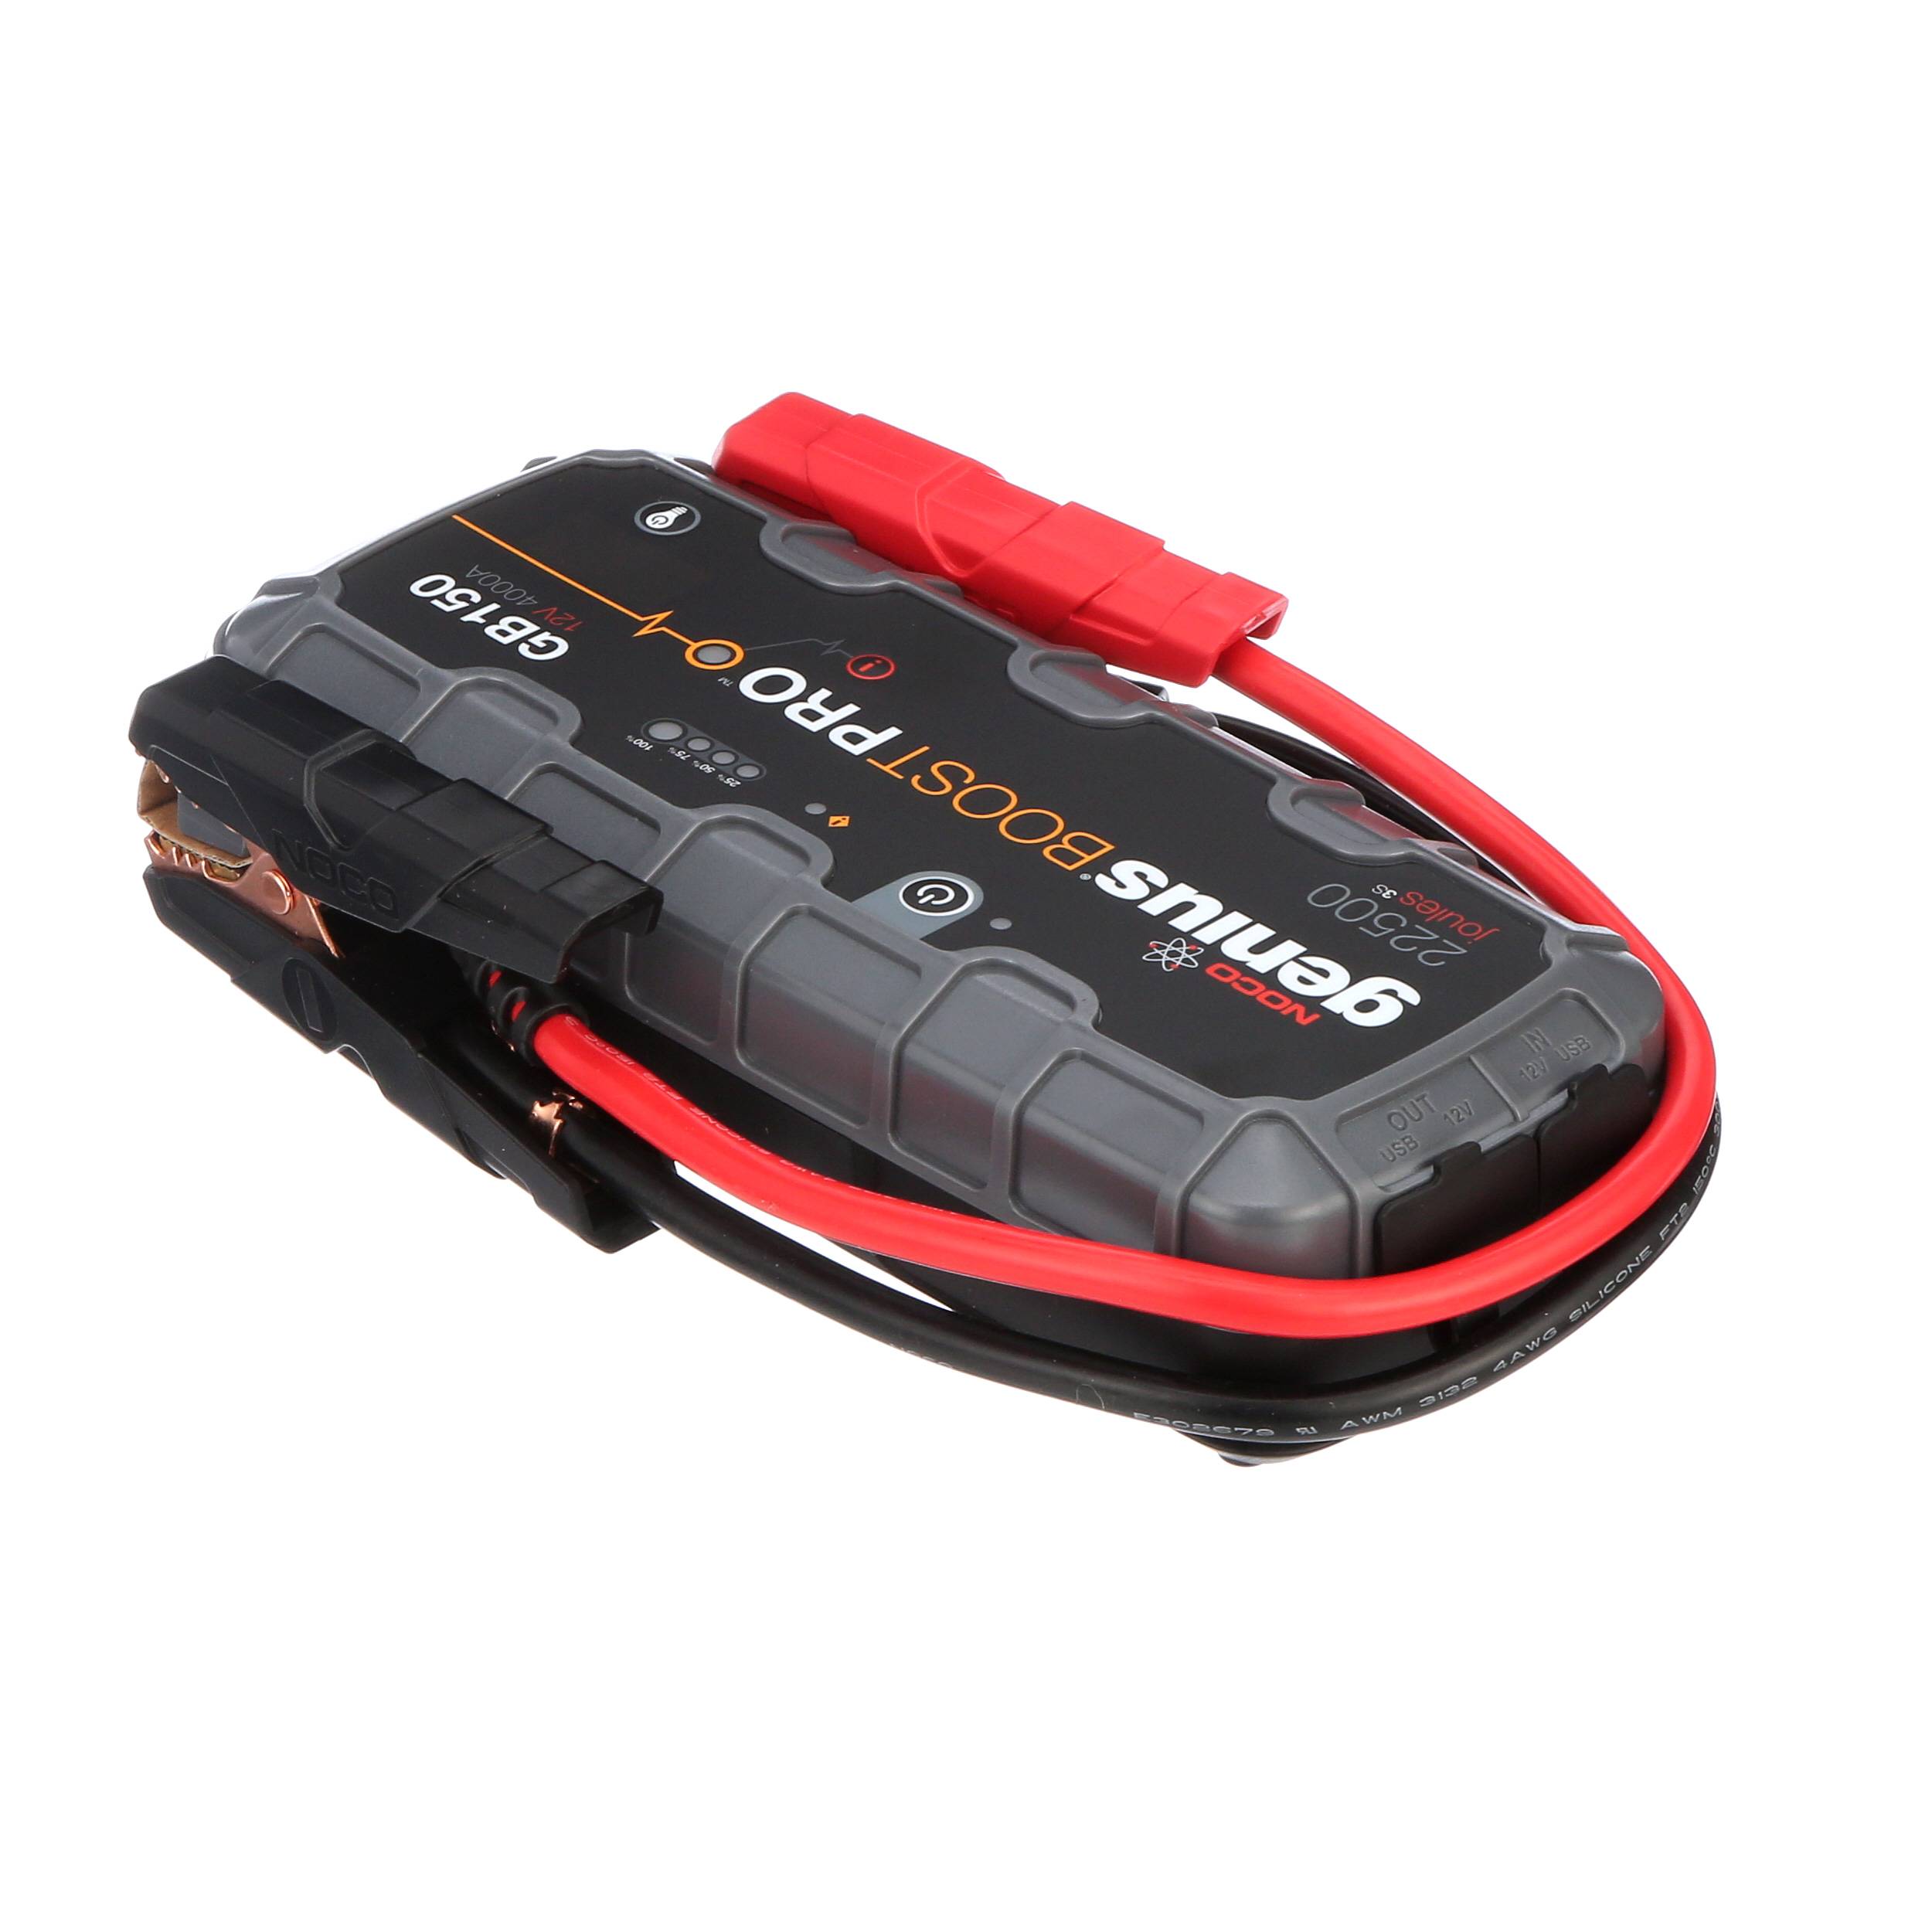  NOCO Boost Pro GB150 3000A UltraSafe Car Battery Jump